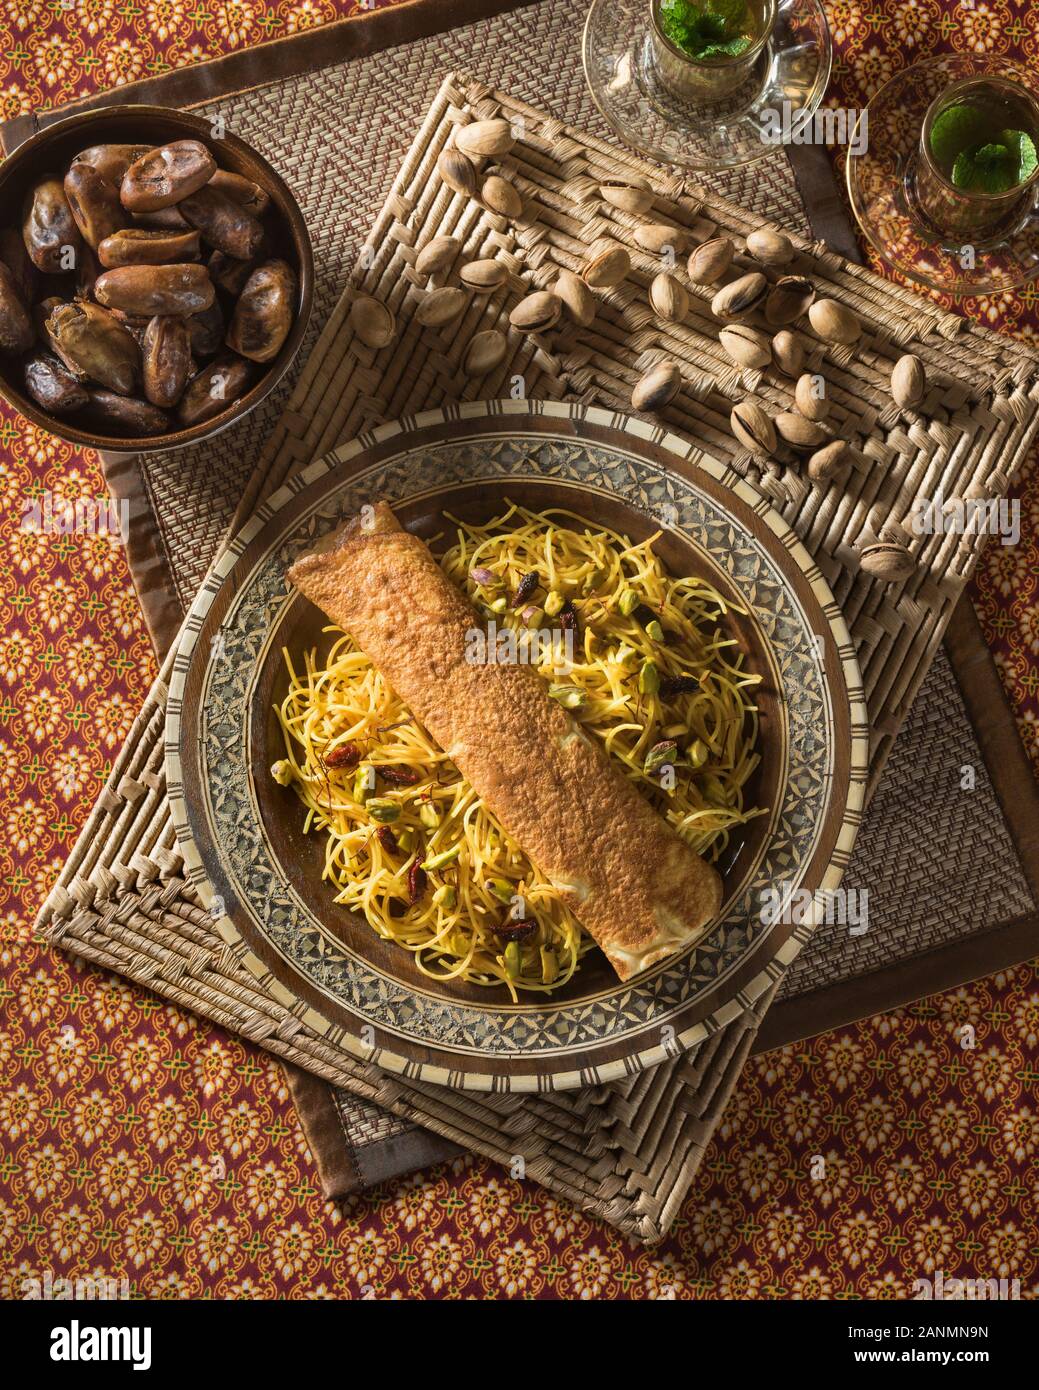 Balaleet. Traditional Arabic vermicelli dish. Middle East Food Stock Photo